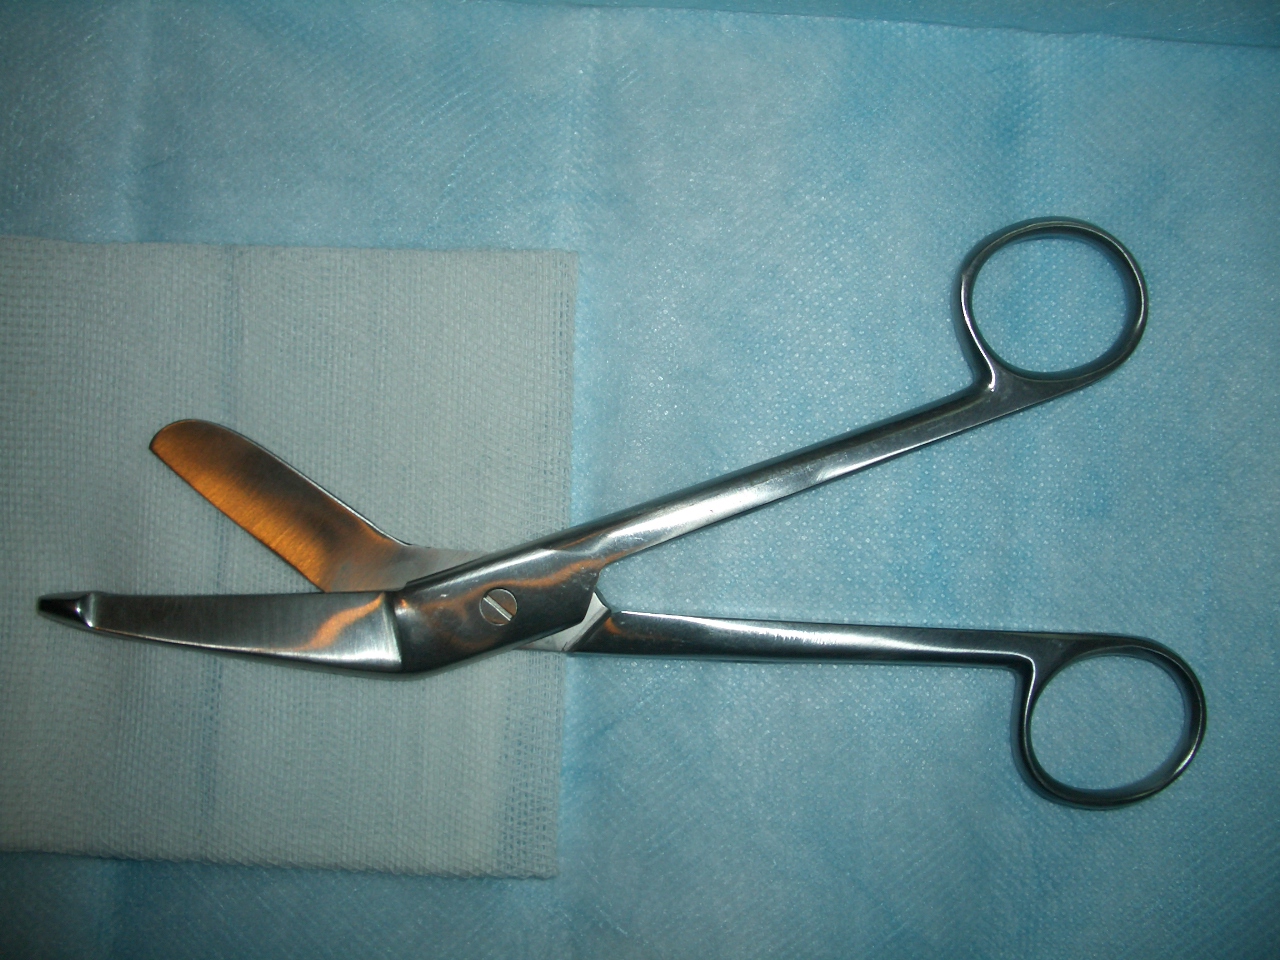 Bandage scissors - Wikipedia